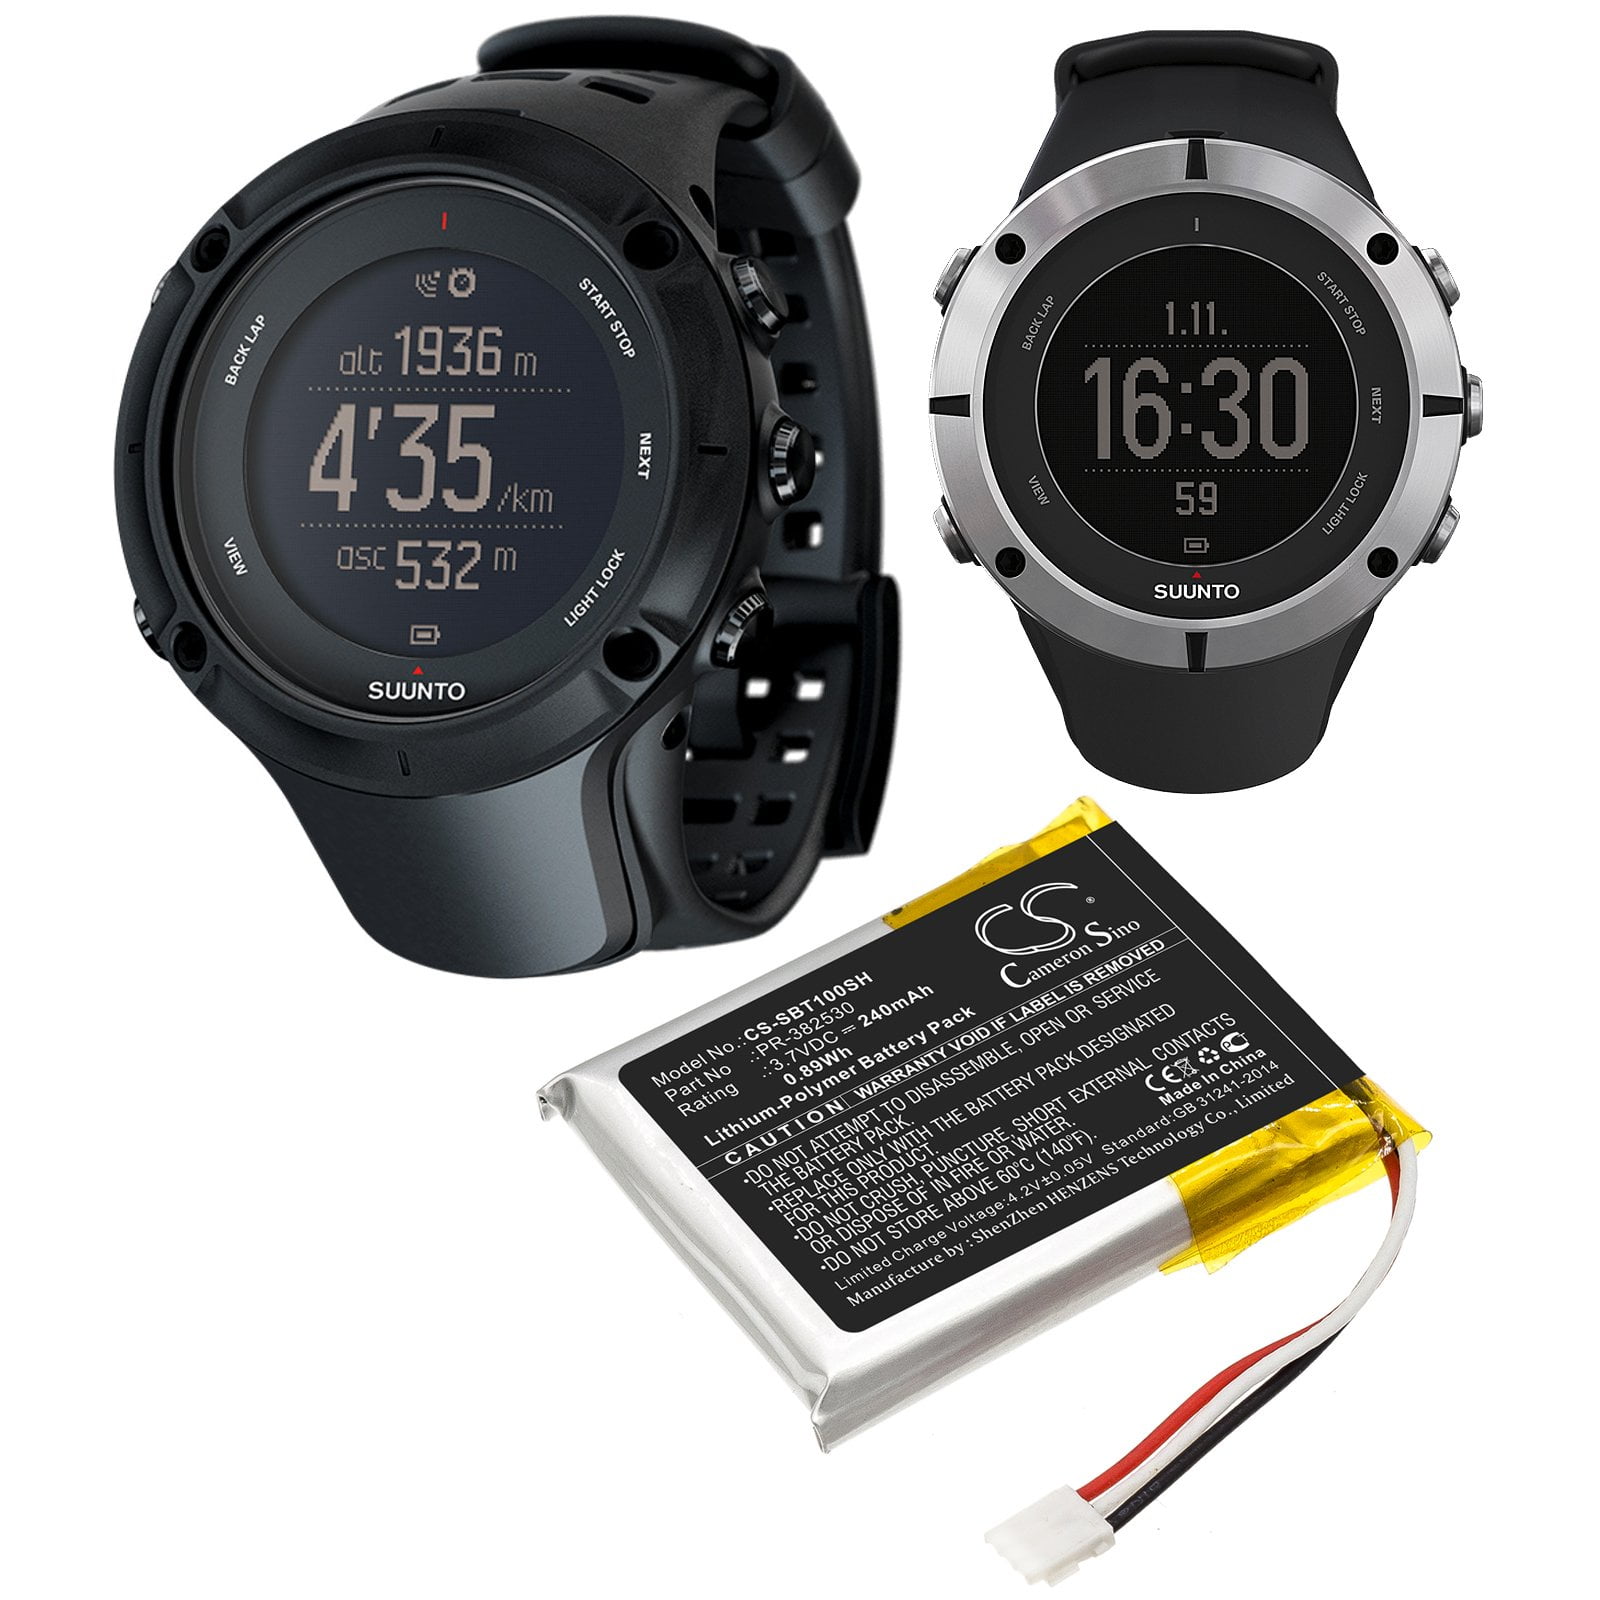 PR-382530 for Suunto Ambit 1, Ambit 2, Ambit 2S, Ambit 3 HR GPS Watch, 240mAh - sold by smavco - Walmart.com